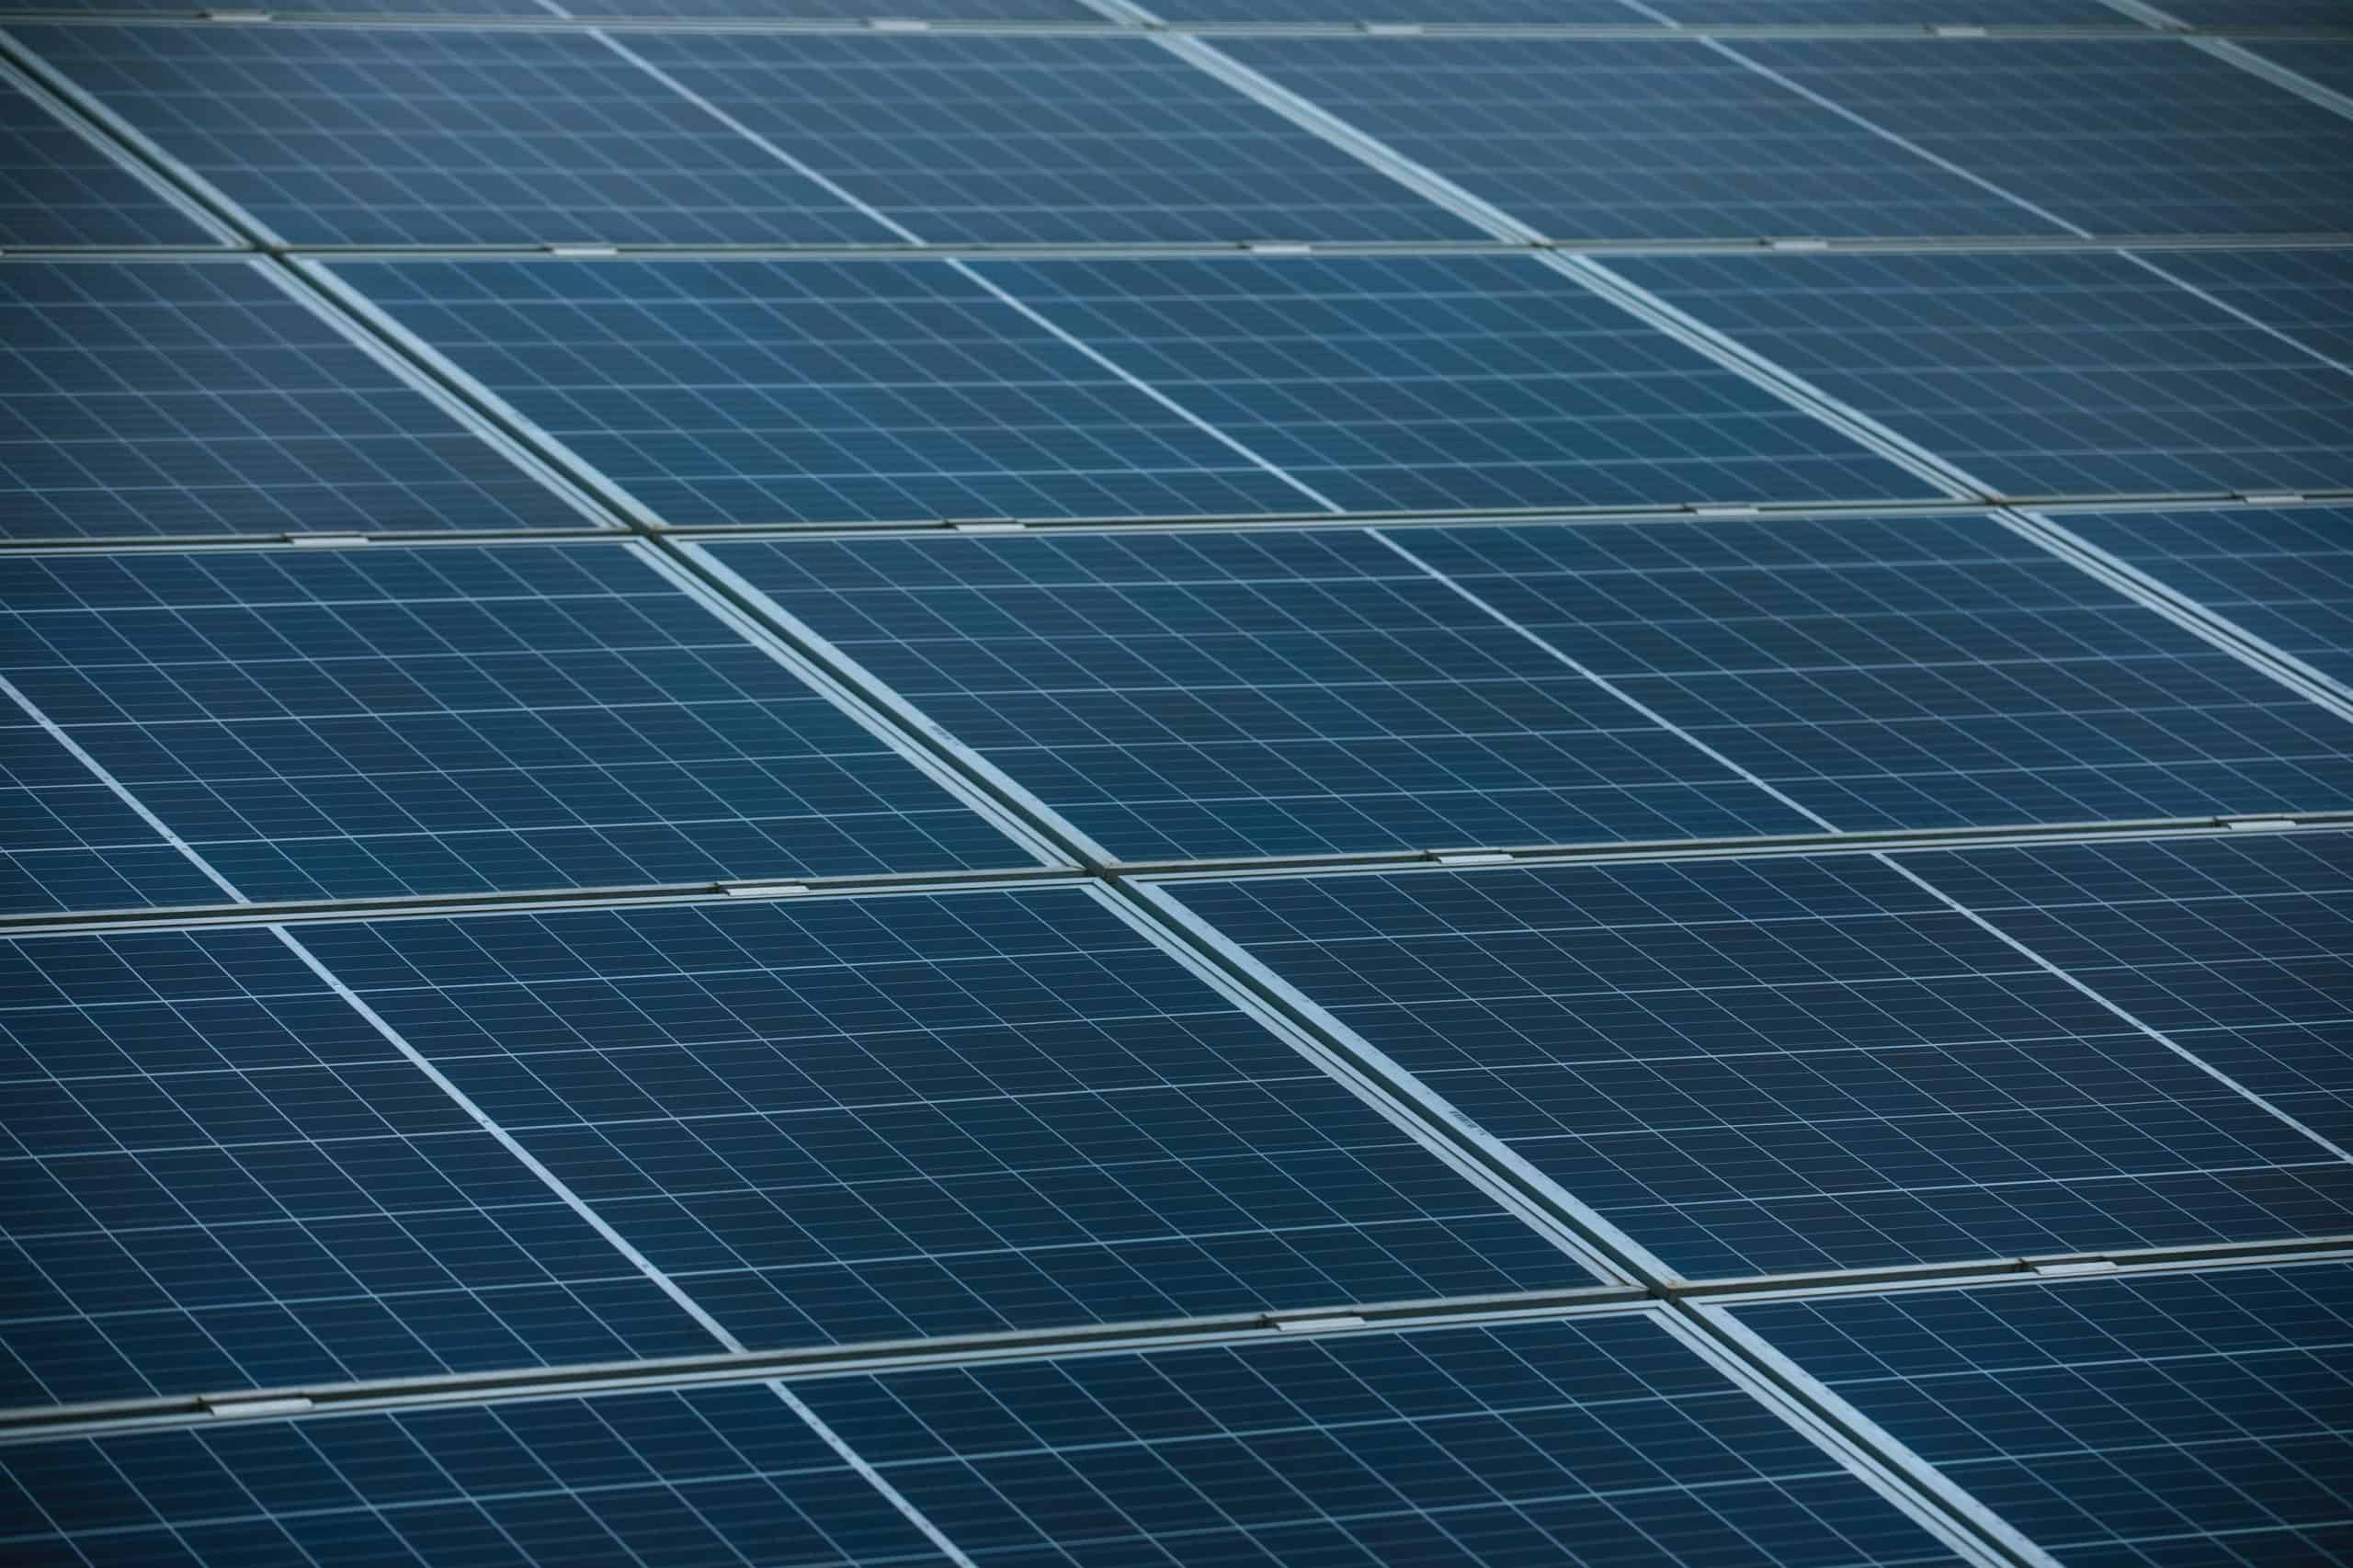 Introducing the Bristol-based solar developer Aura Power Developments Ltd